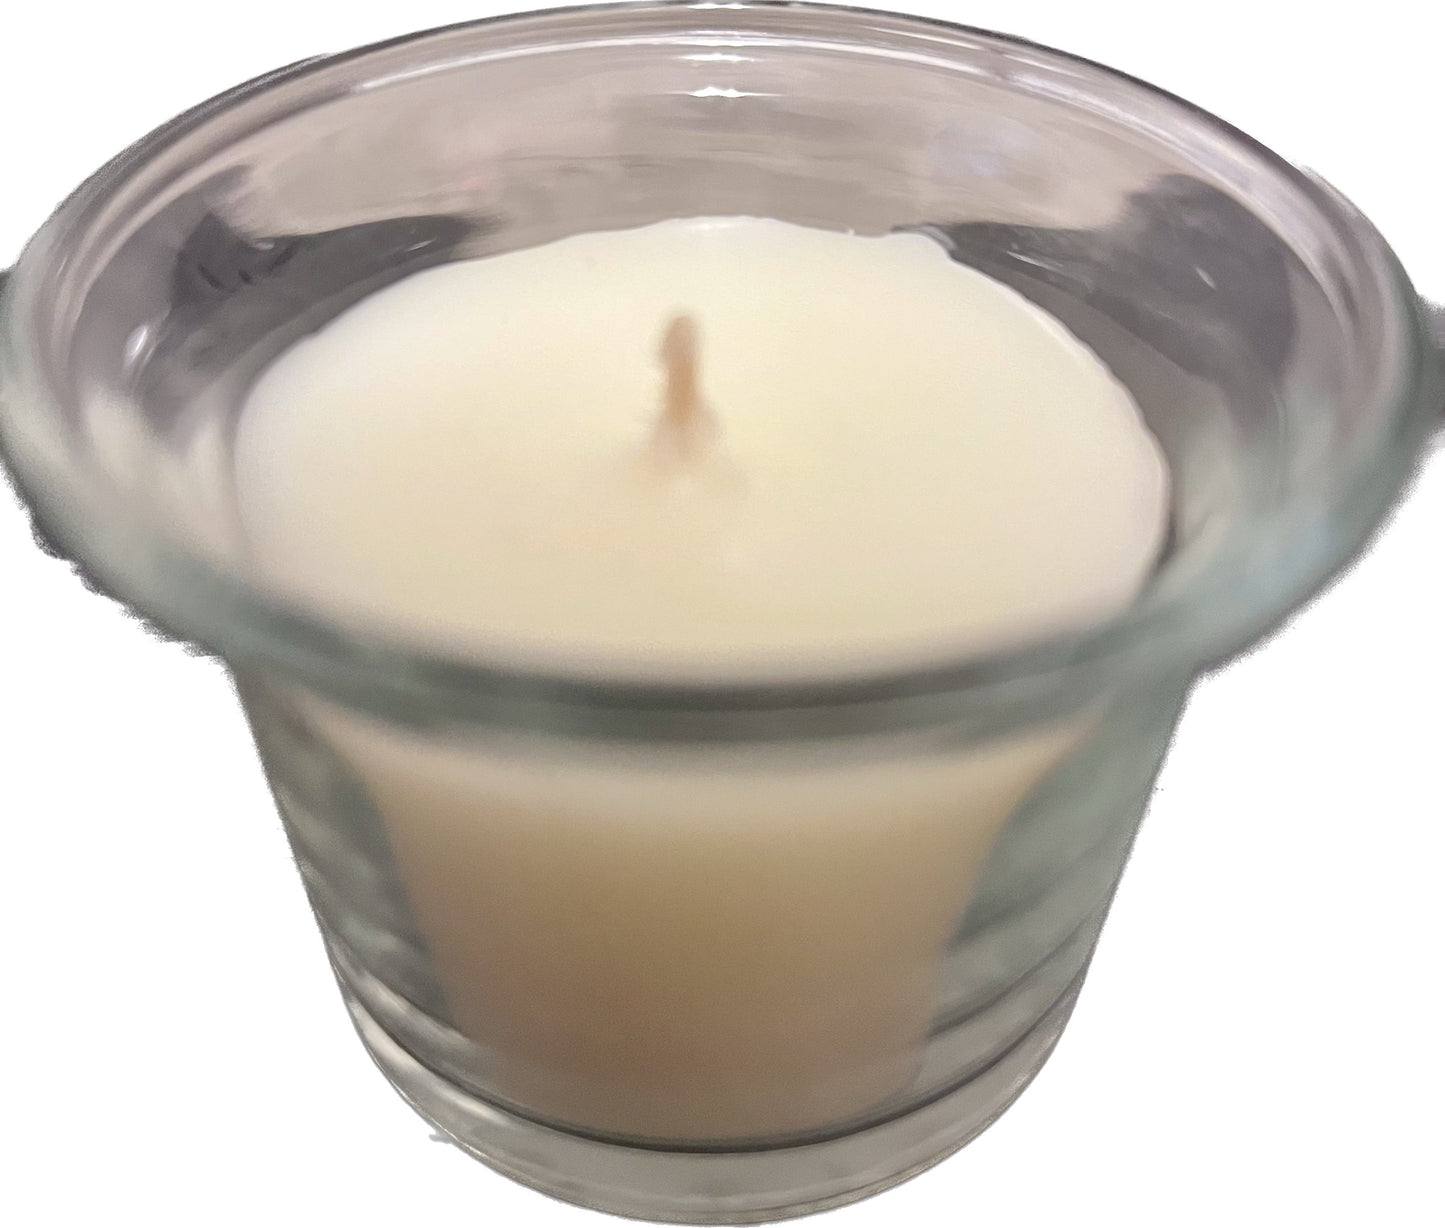 votive candle in glass votive holder